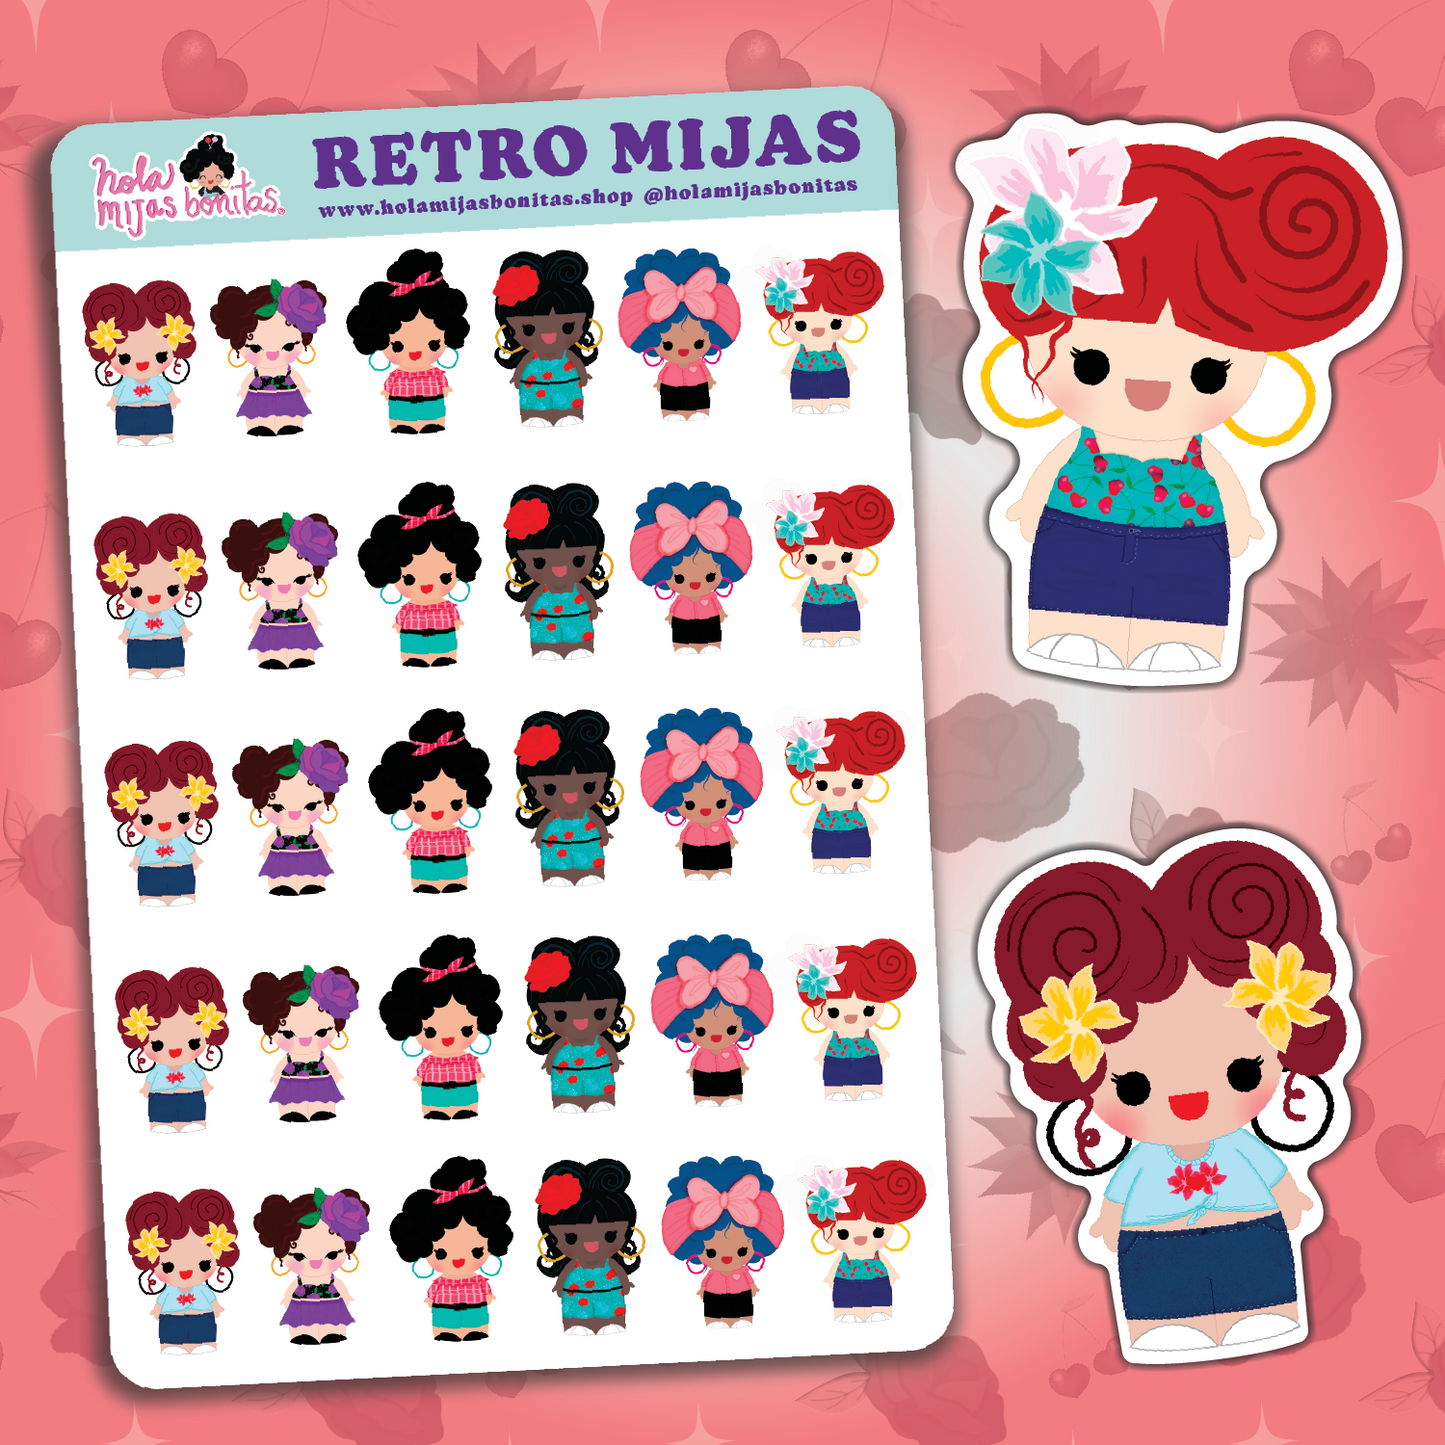 Copy of Retro Mijas Small Sticker Sheet